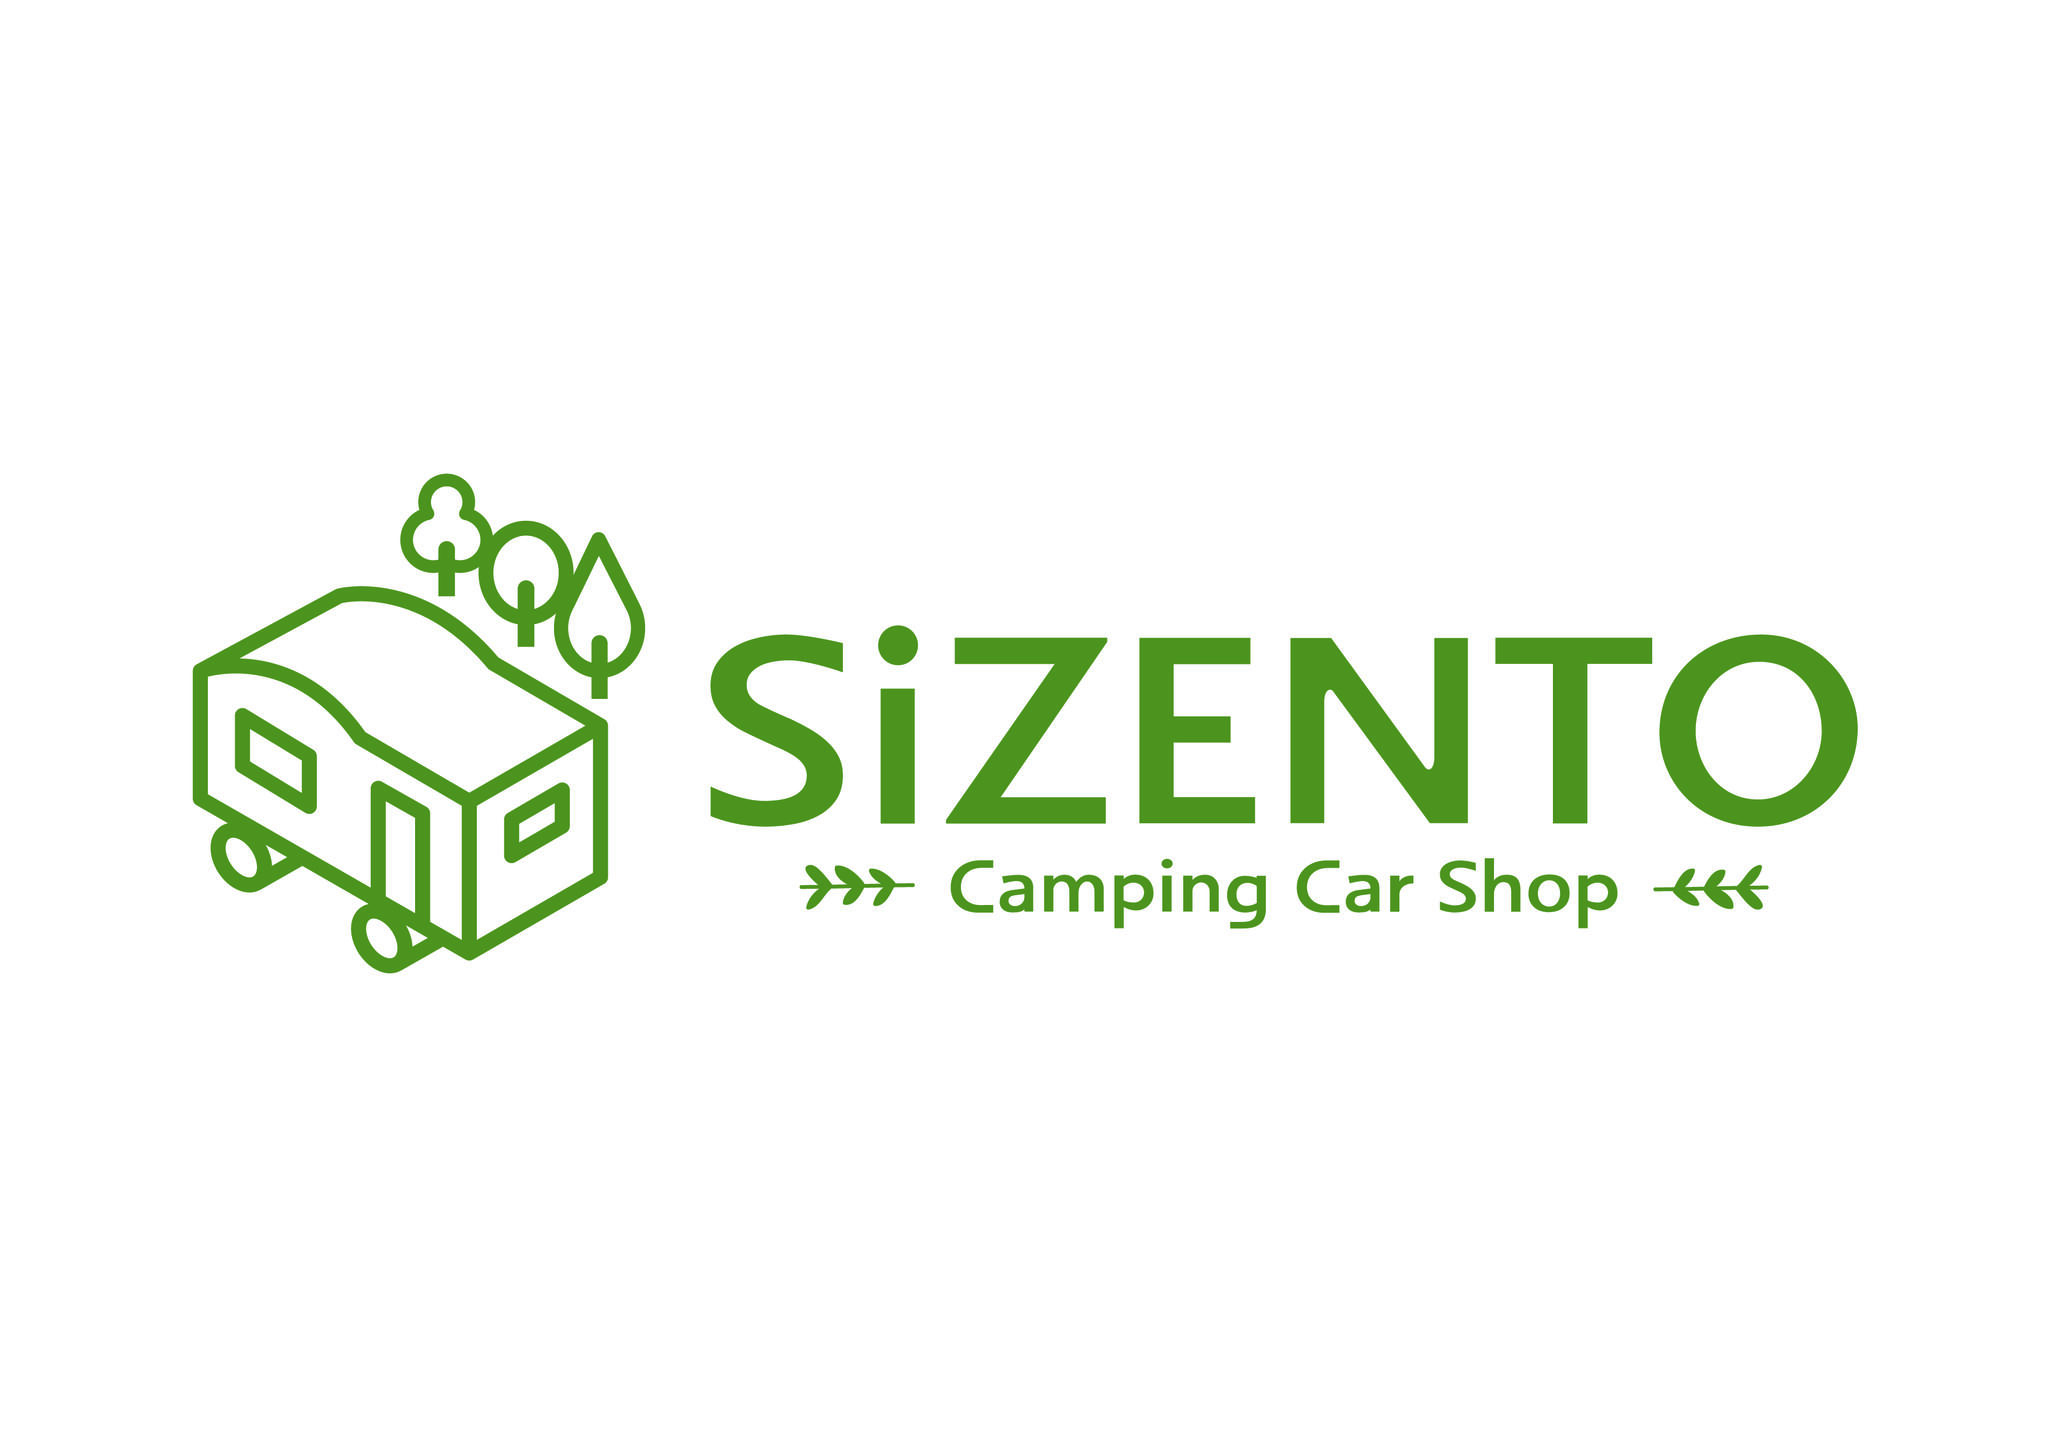 Camping Car Shop SiZENTOの代表写真1